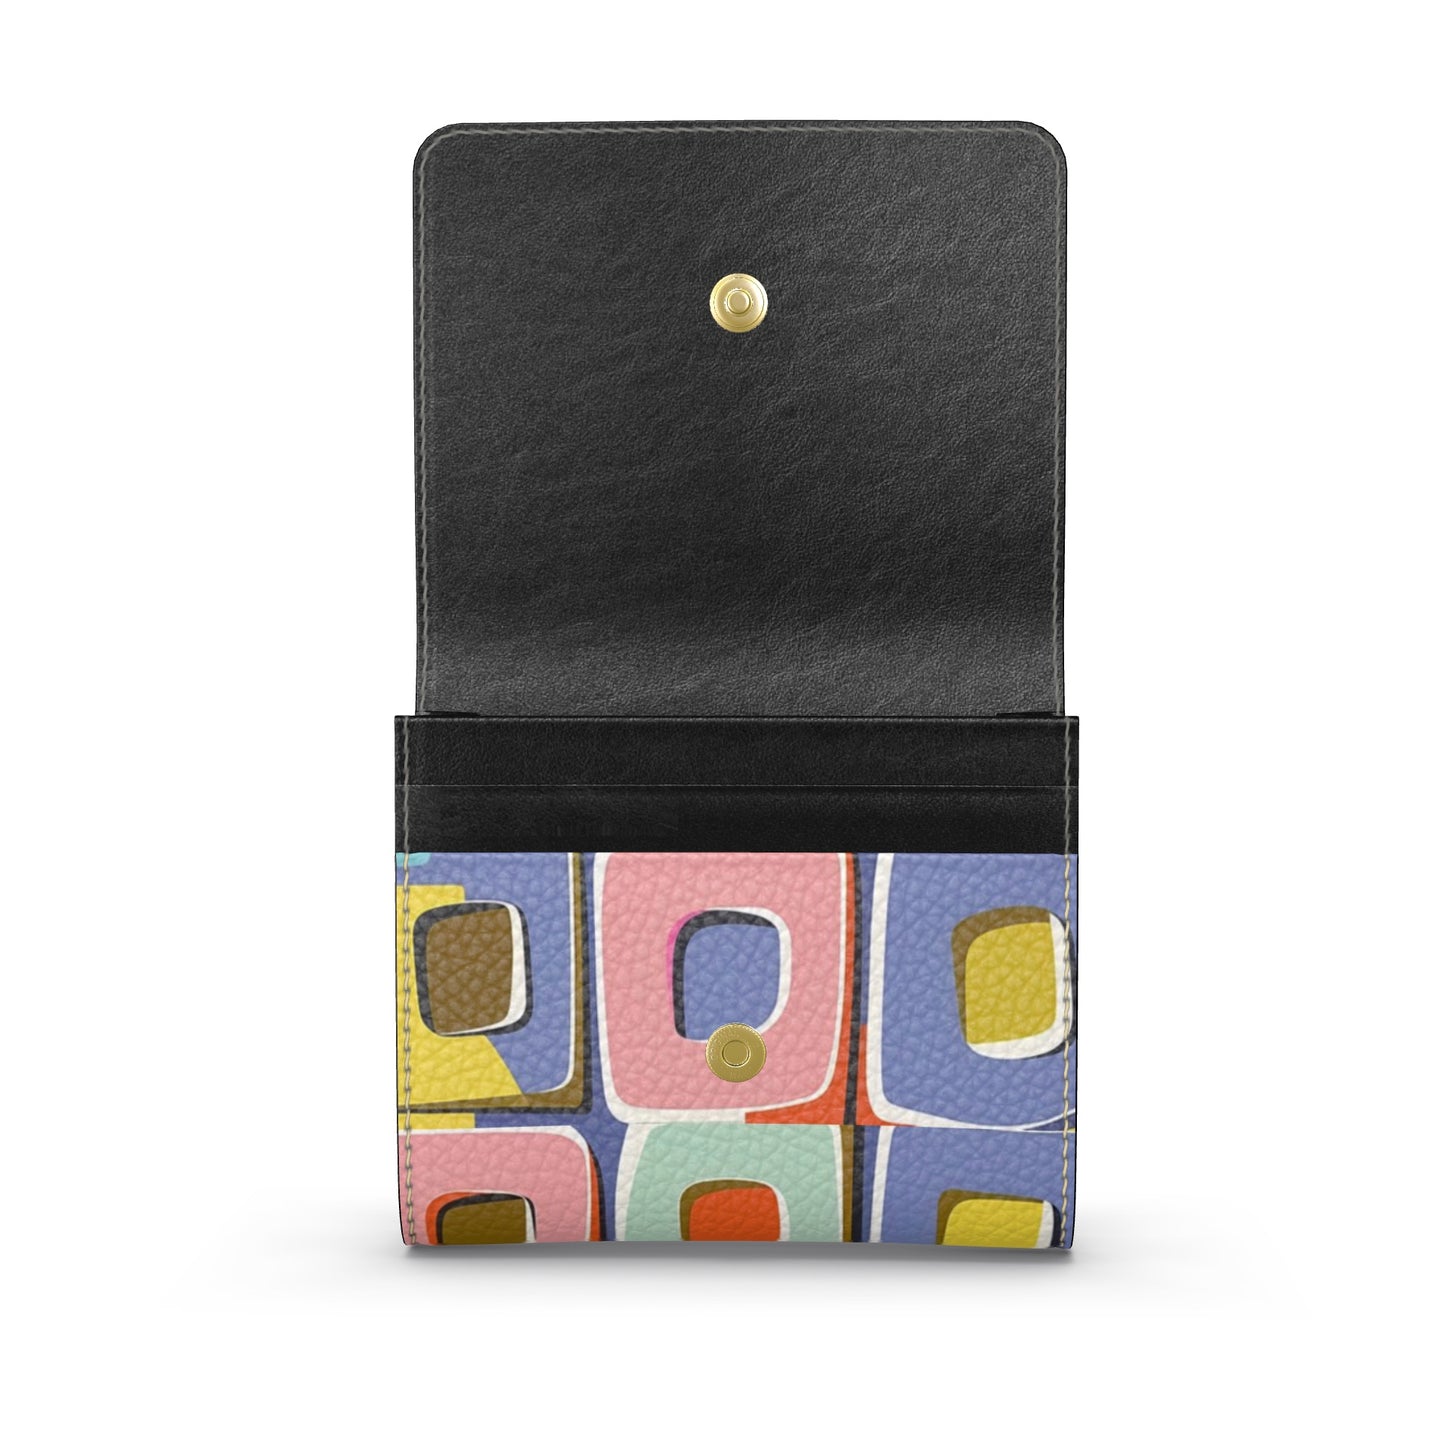 Ferdinand Serenity Foldover Wallet, Nappa Leather 4" W x 3" H x 1" W